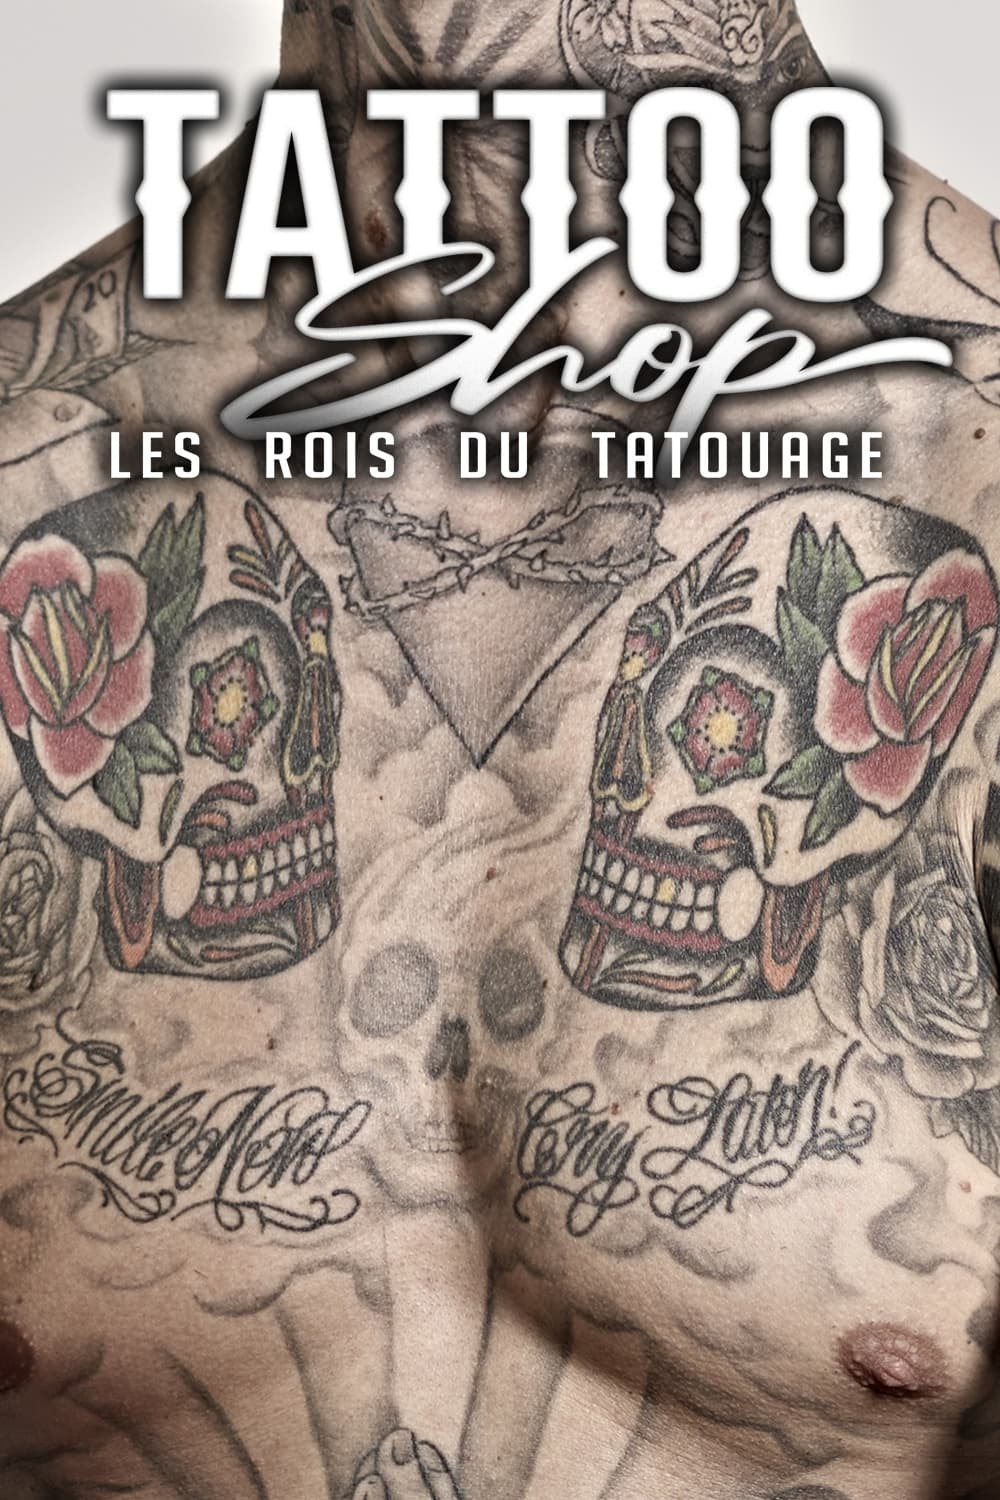 Tattoo Shop : Les rois du tatouage